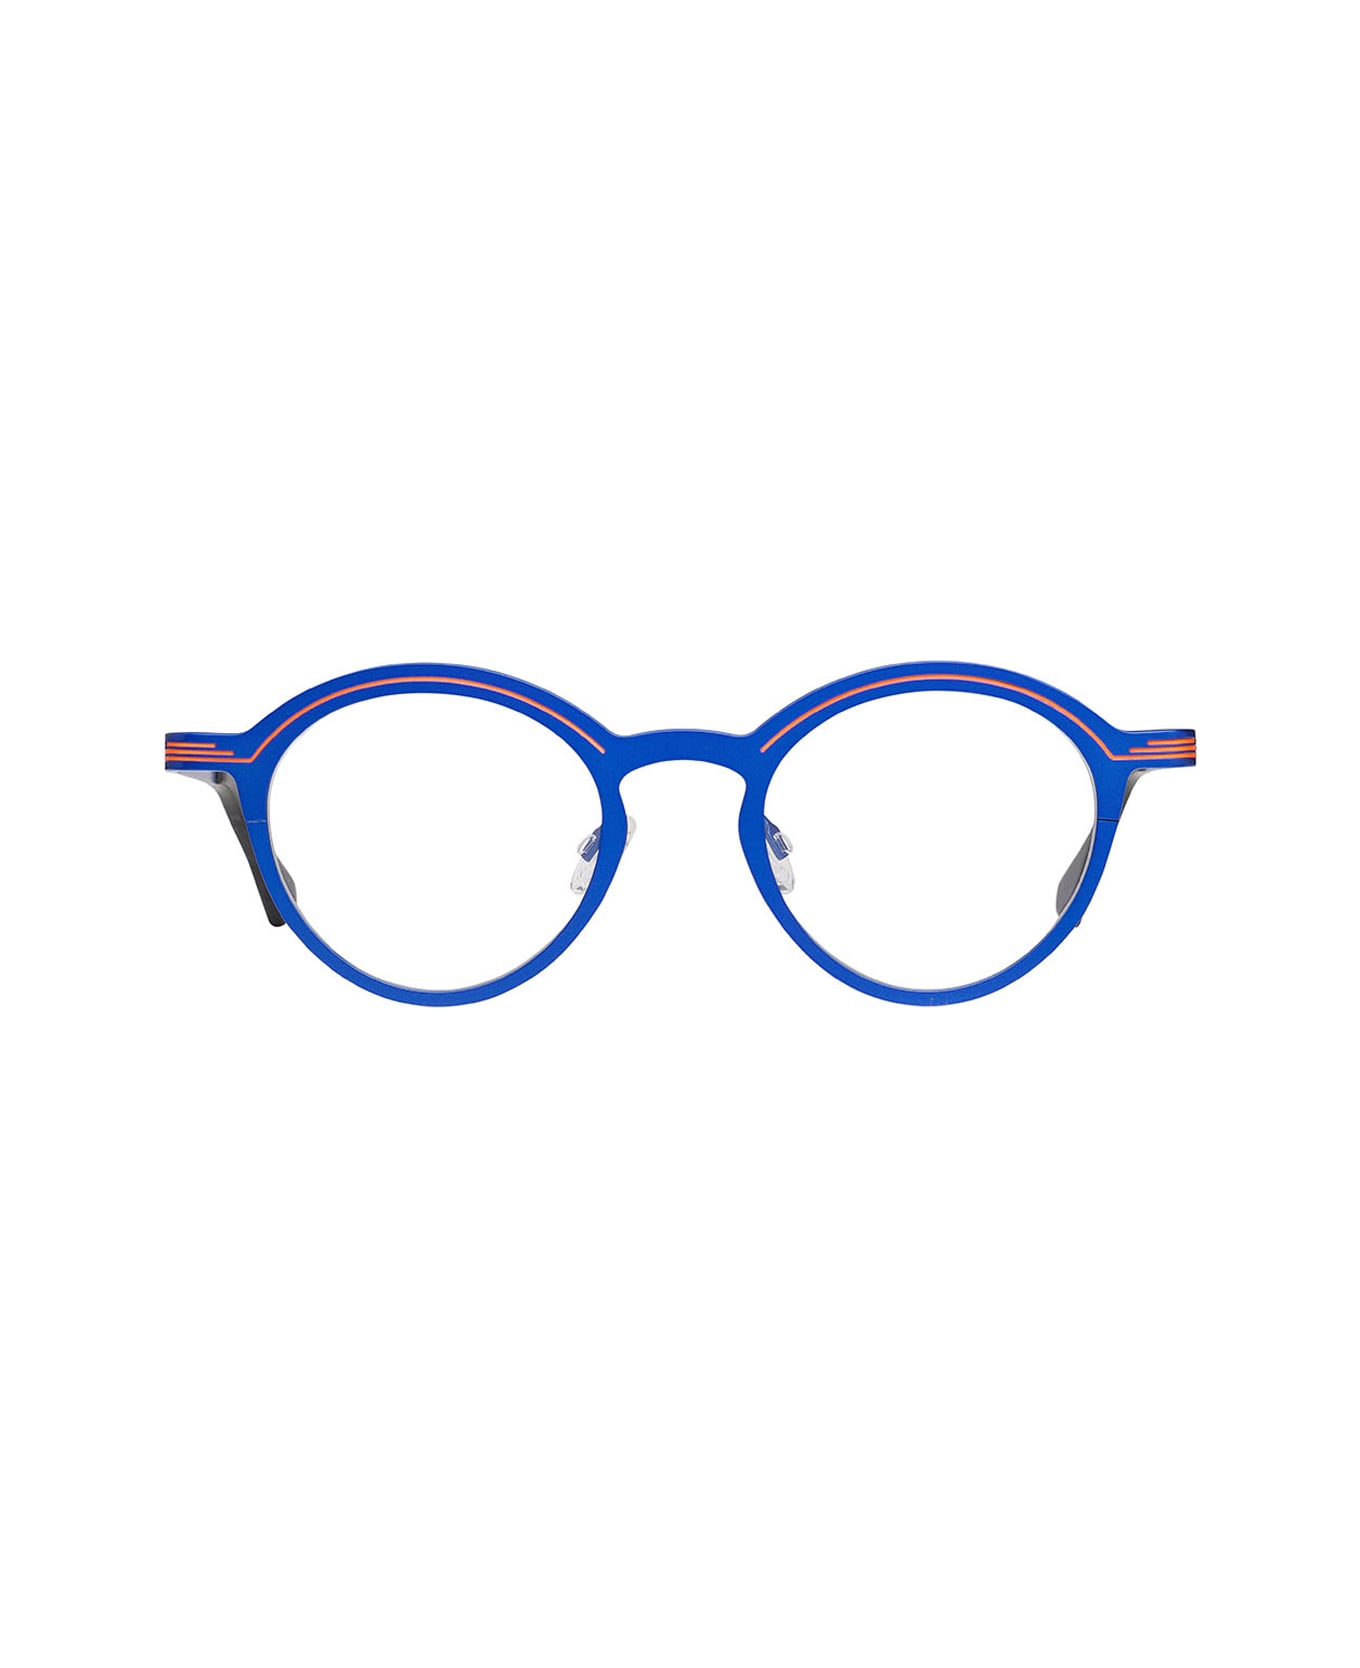 Matttew Tetra 1395 Glasses - Blu